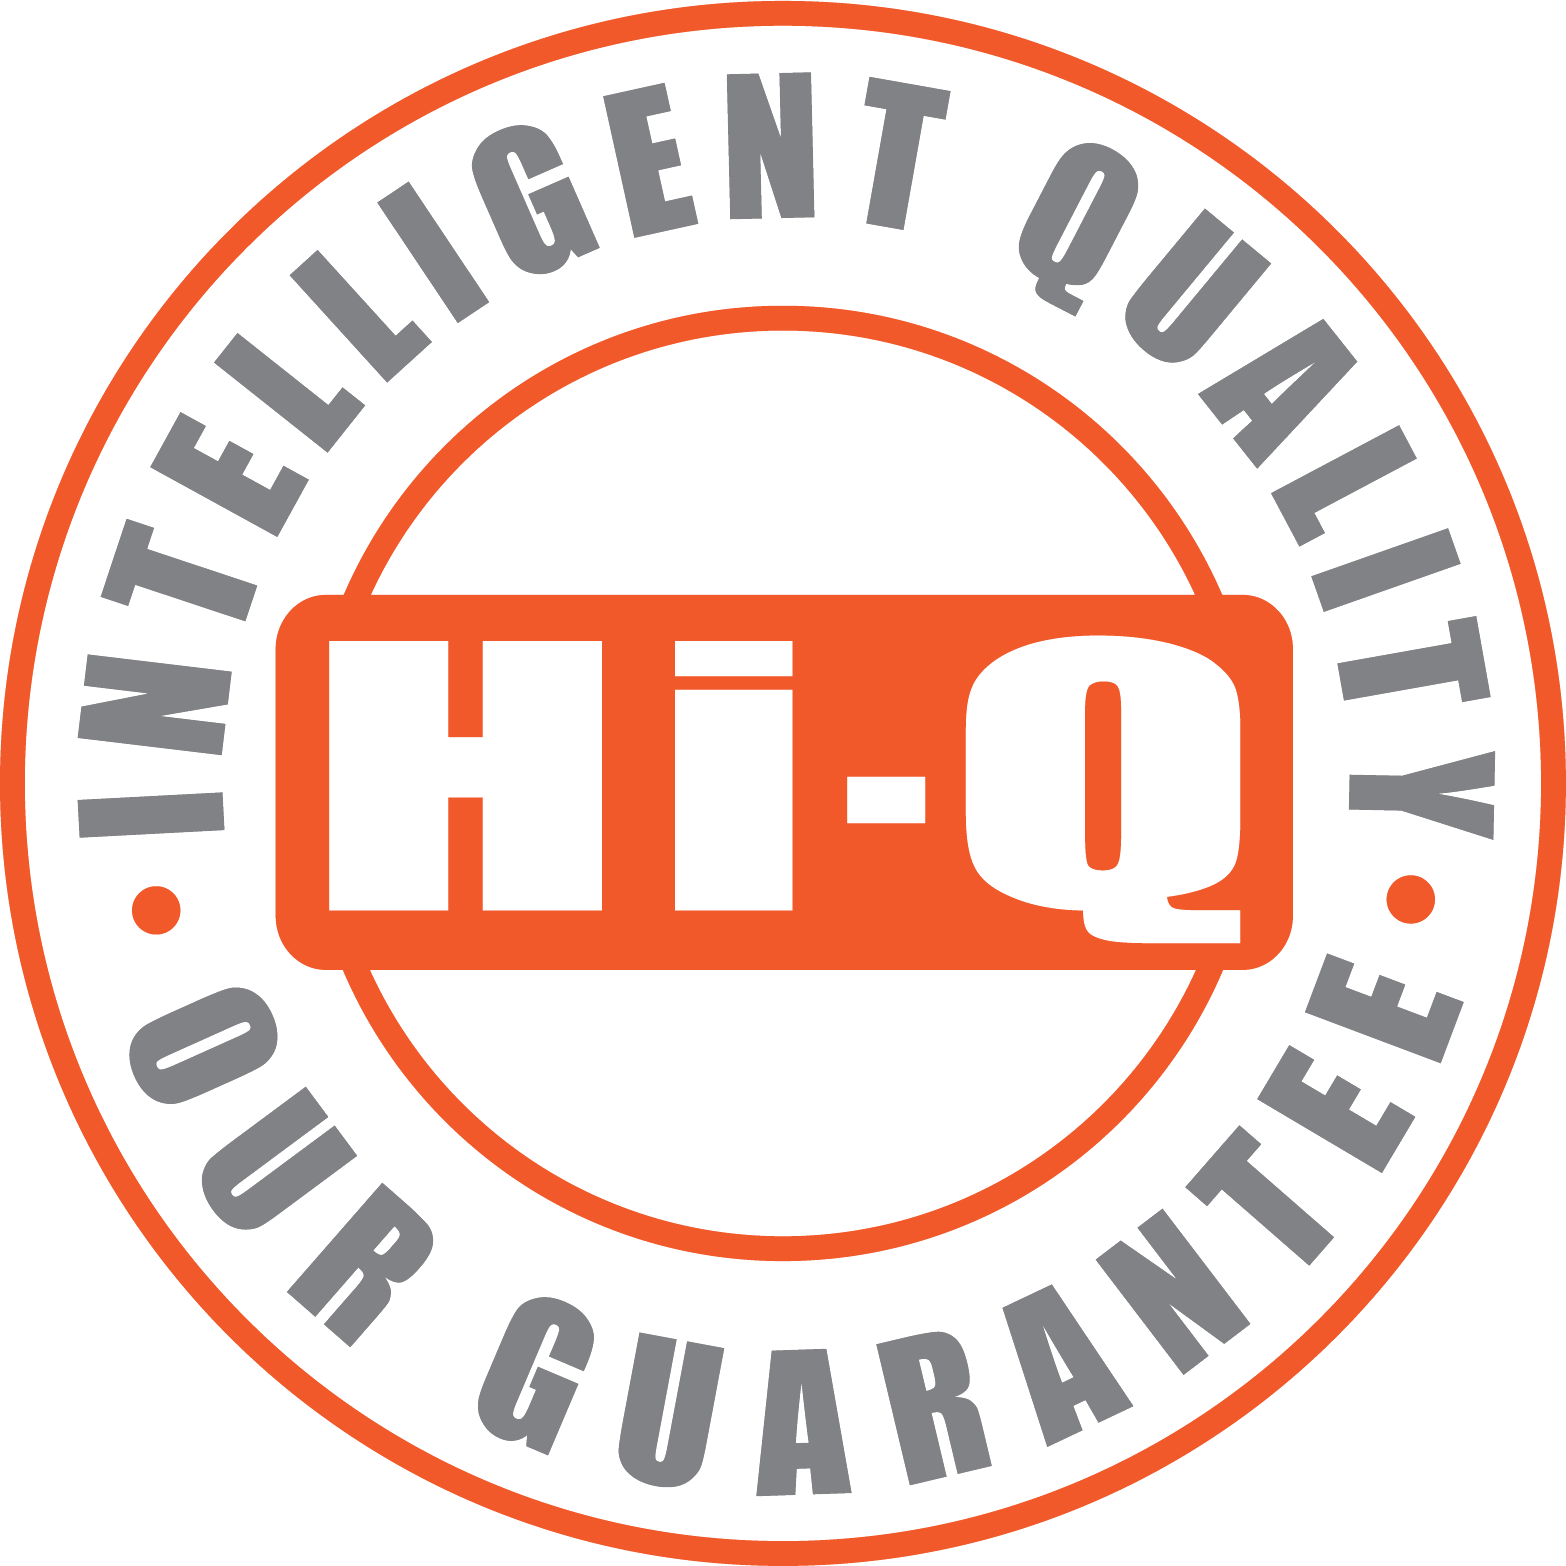 Quality Q Logo - The Hi-Q Morphun Quality Guarantee logo - Morphun Toys